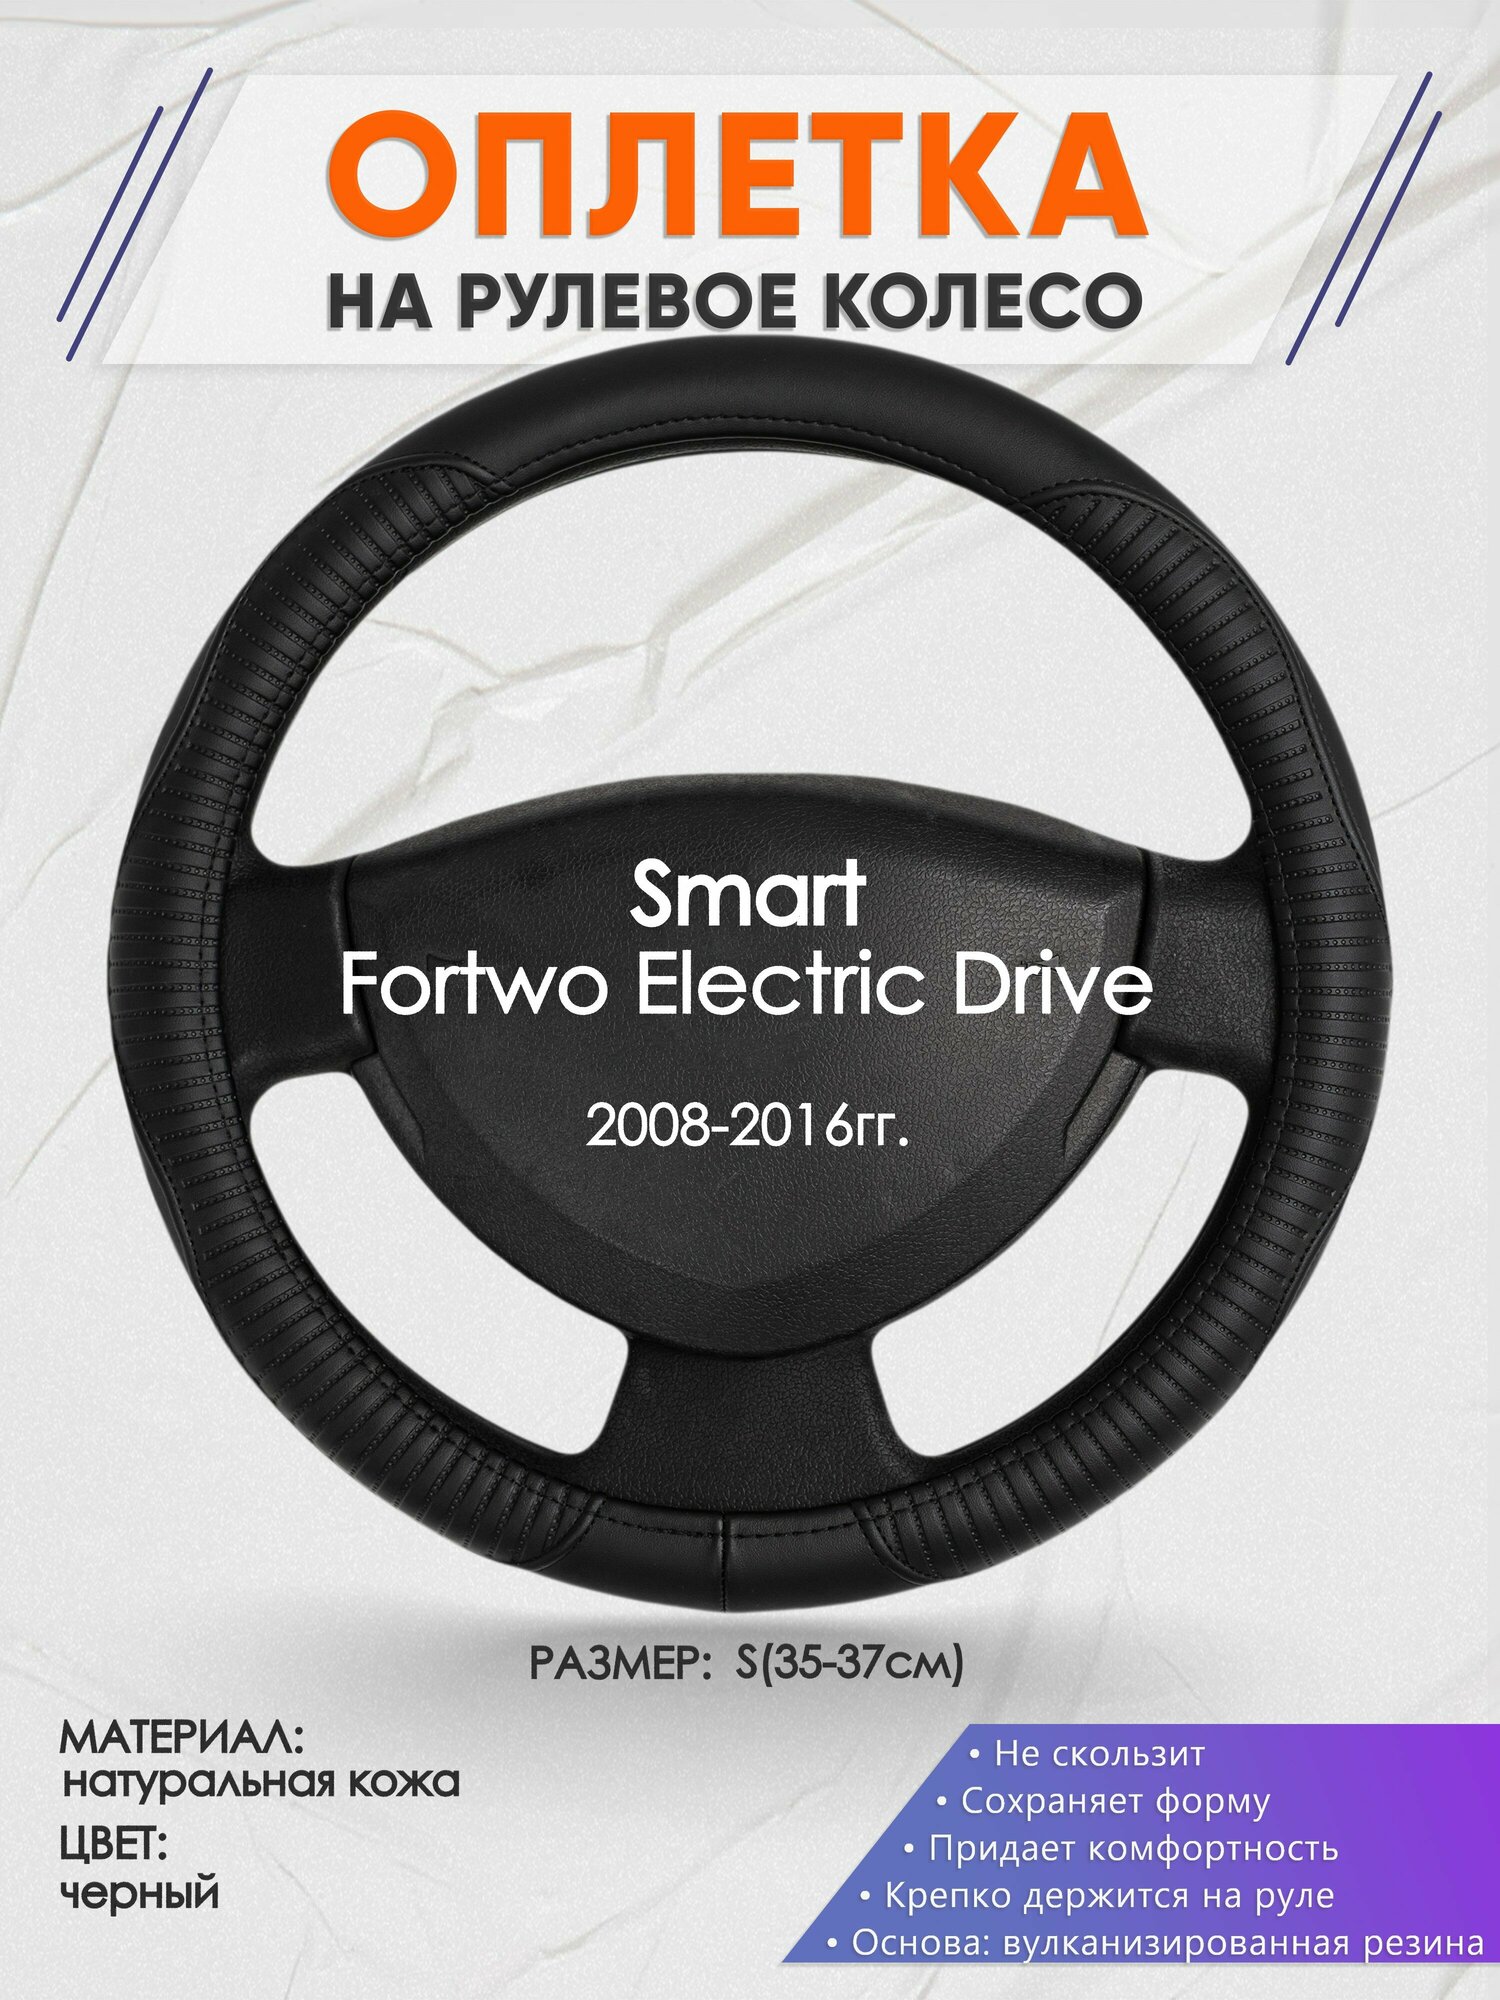 Оплетка на руль для Smart Fortwo Electric Drive(Смарт Фоту) 2008-2016, S(35-37см), Натуральная кожа 22